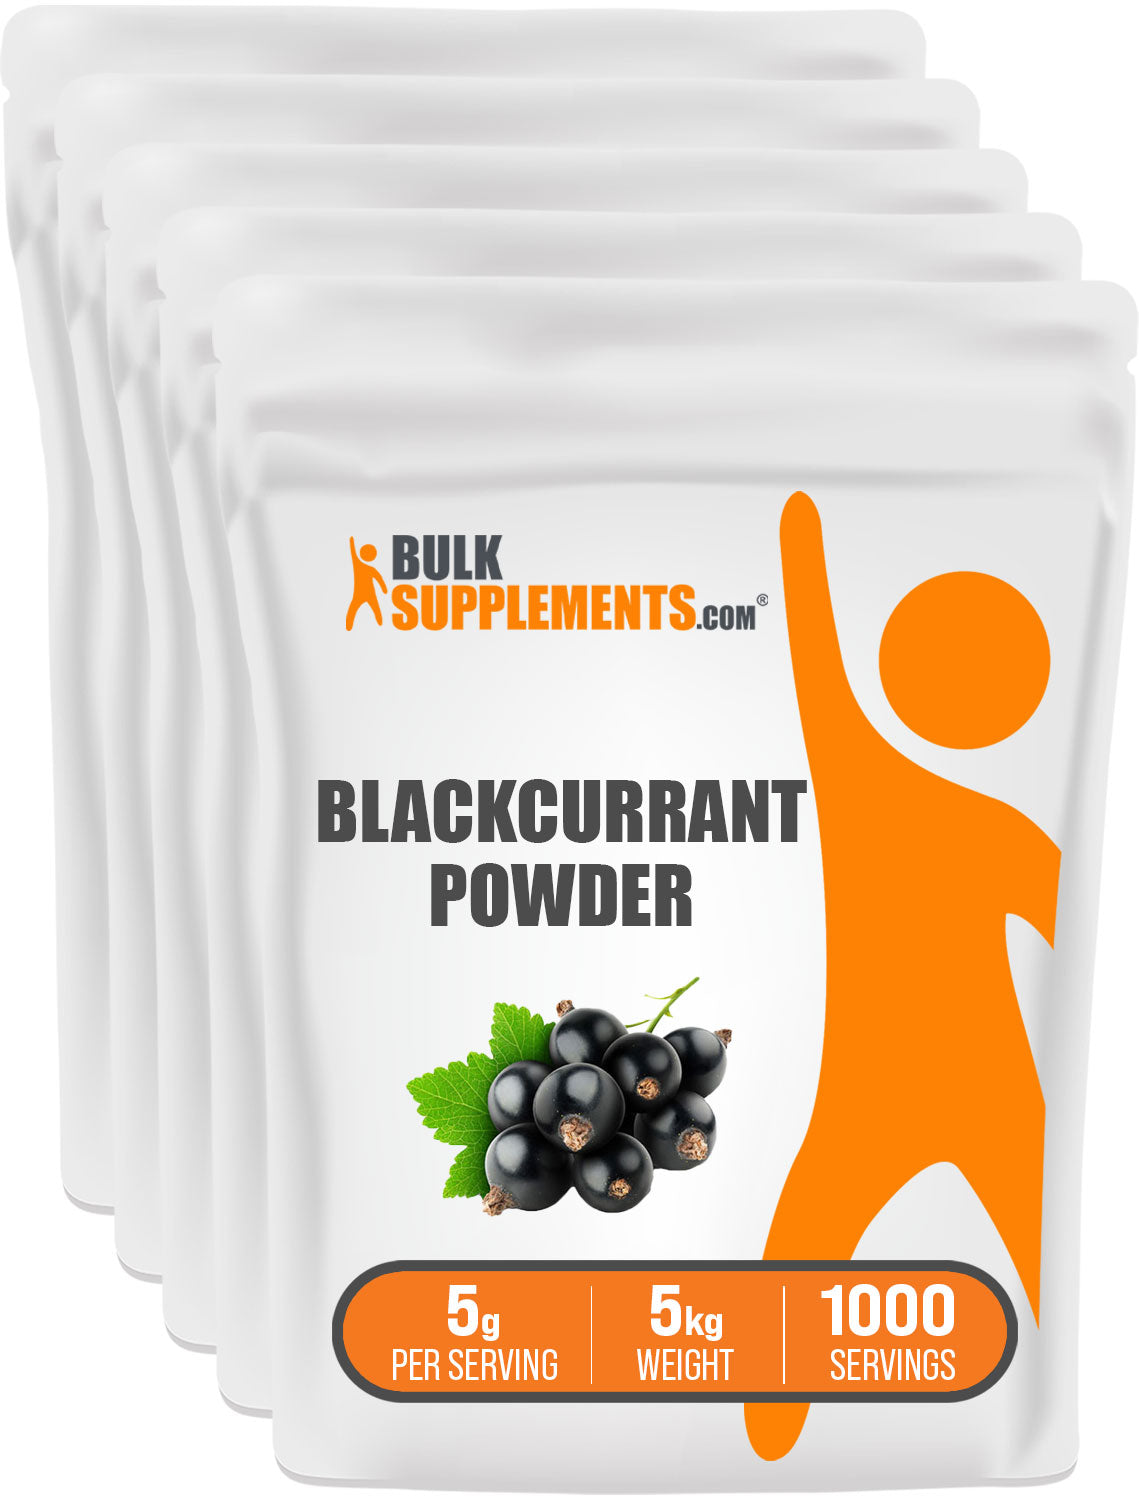 5kg of Blackcurrant Powder